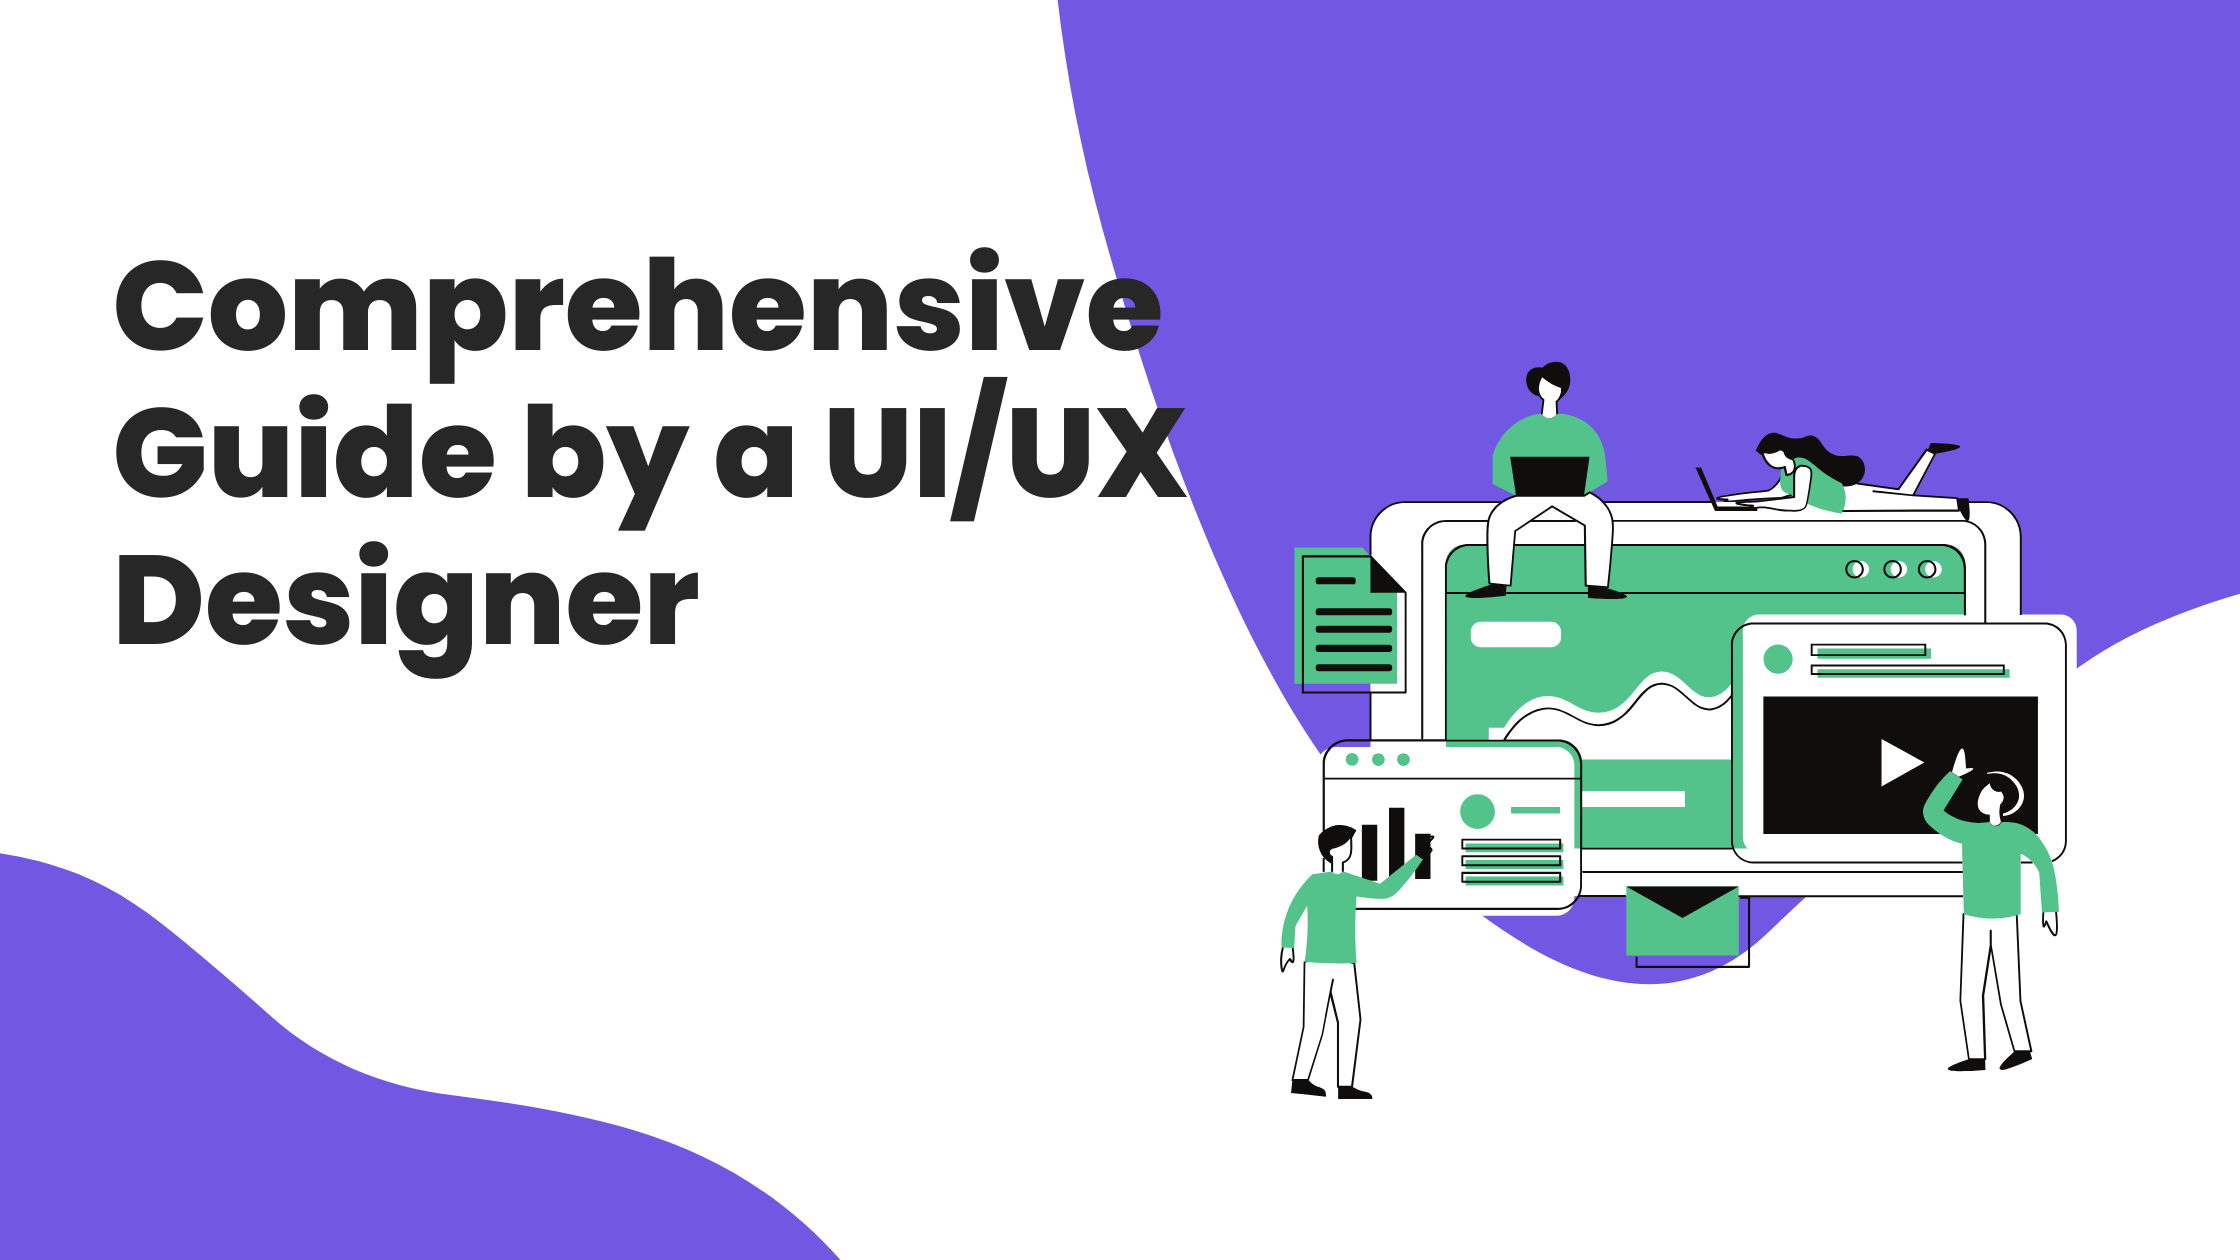 Comprehensive Guide by a UIUX Designer